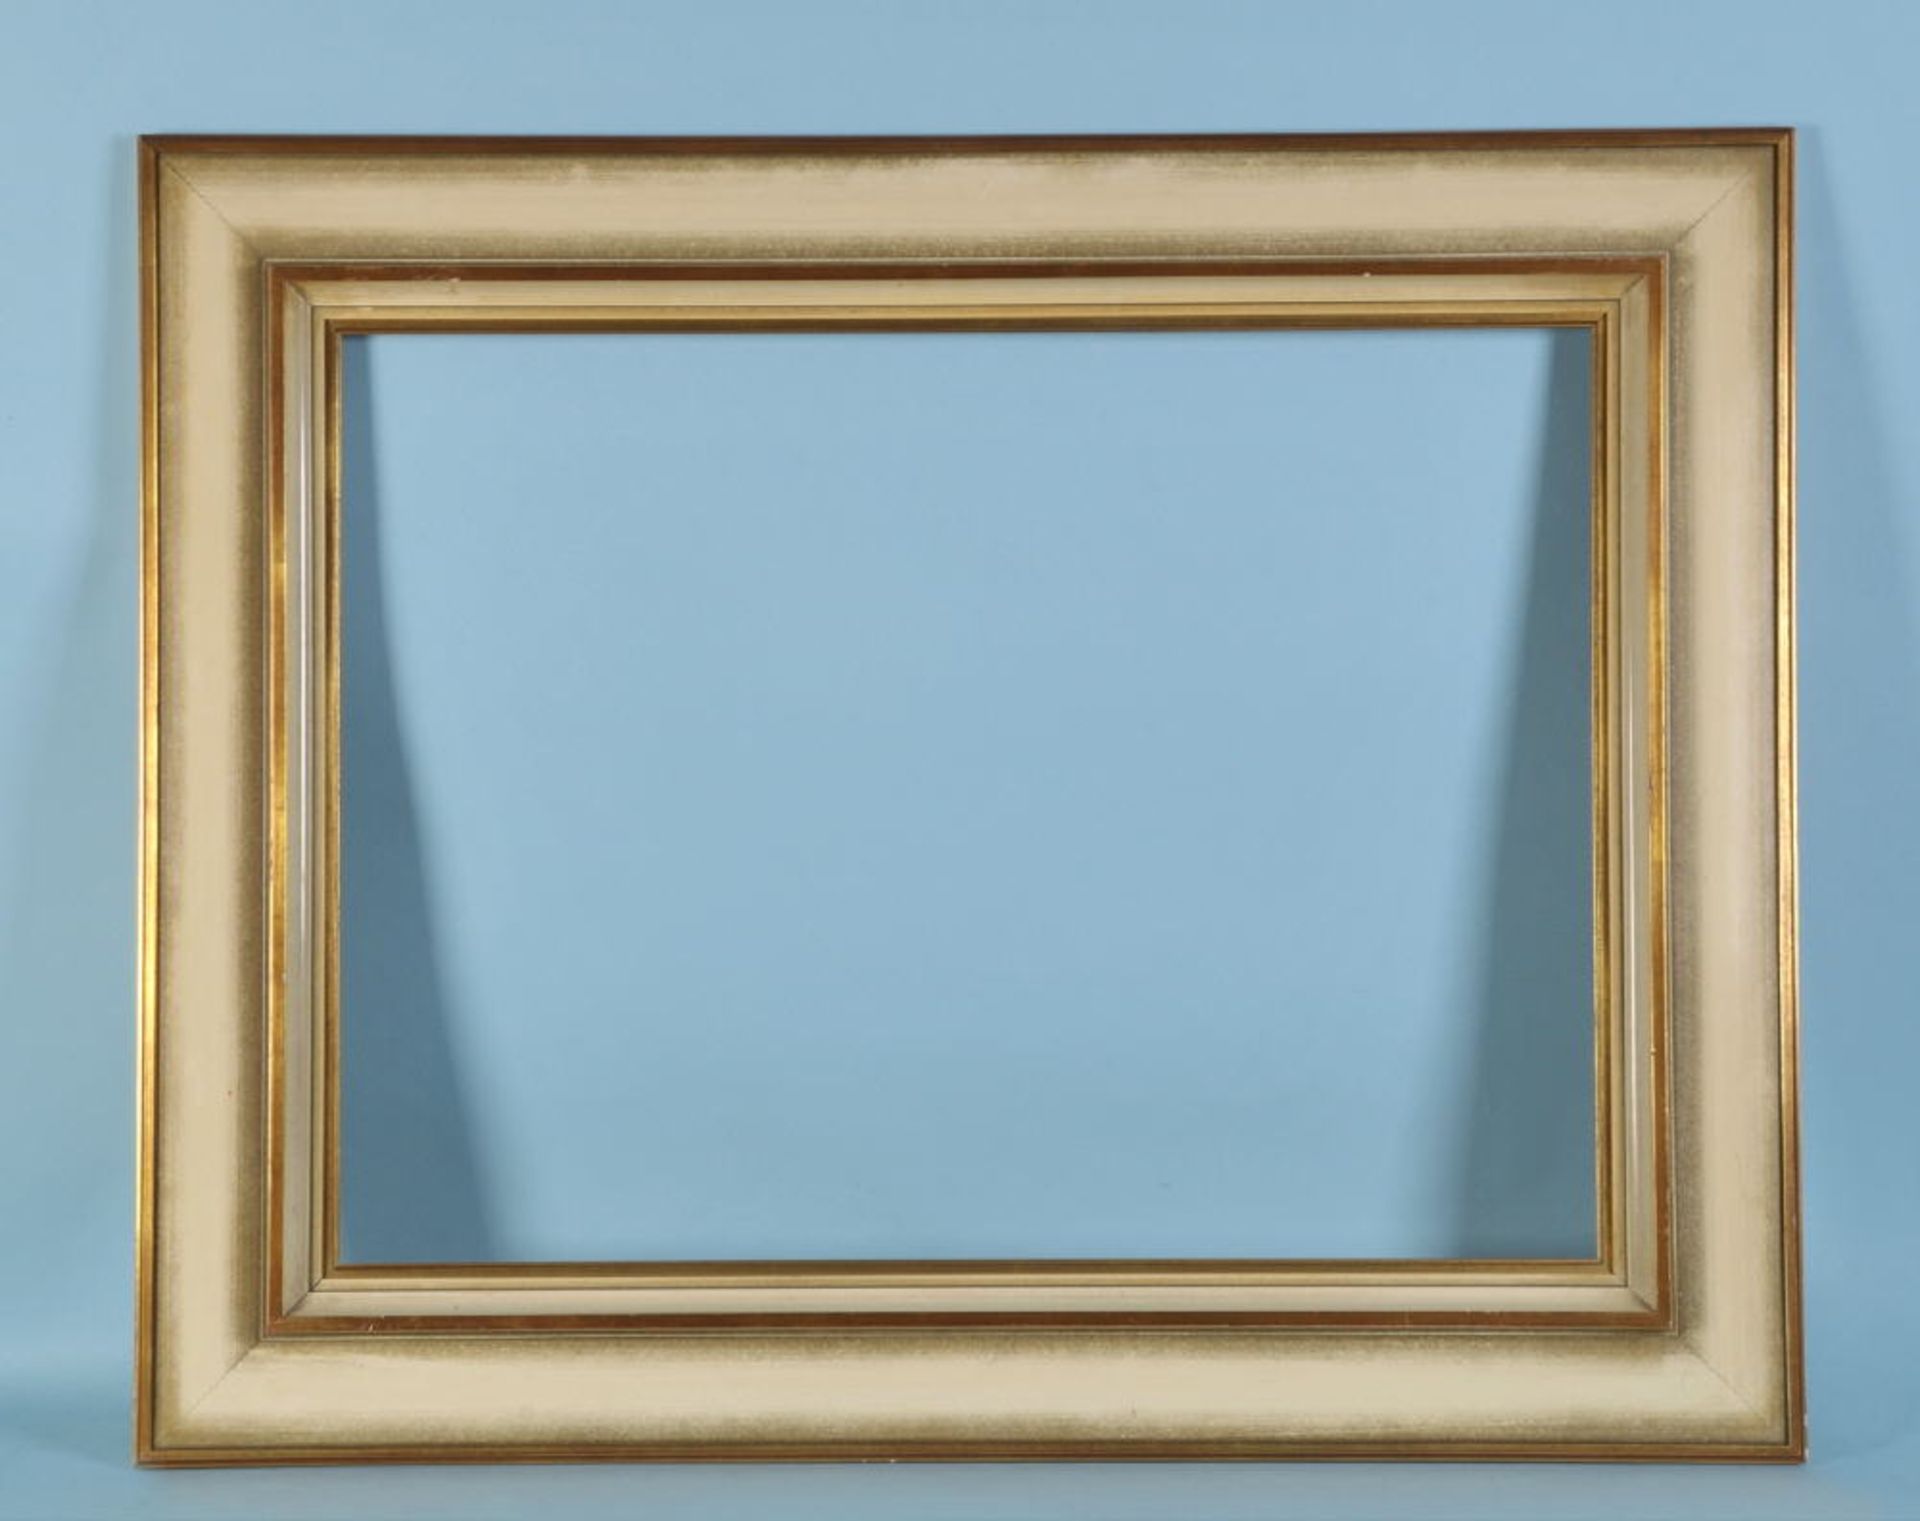 BilderrahmenHolz, weiß/goldfarben, profil. Form, Falzmaß 81 x 61,5 cm, Gesamt 101,5 x 82